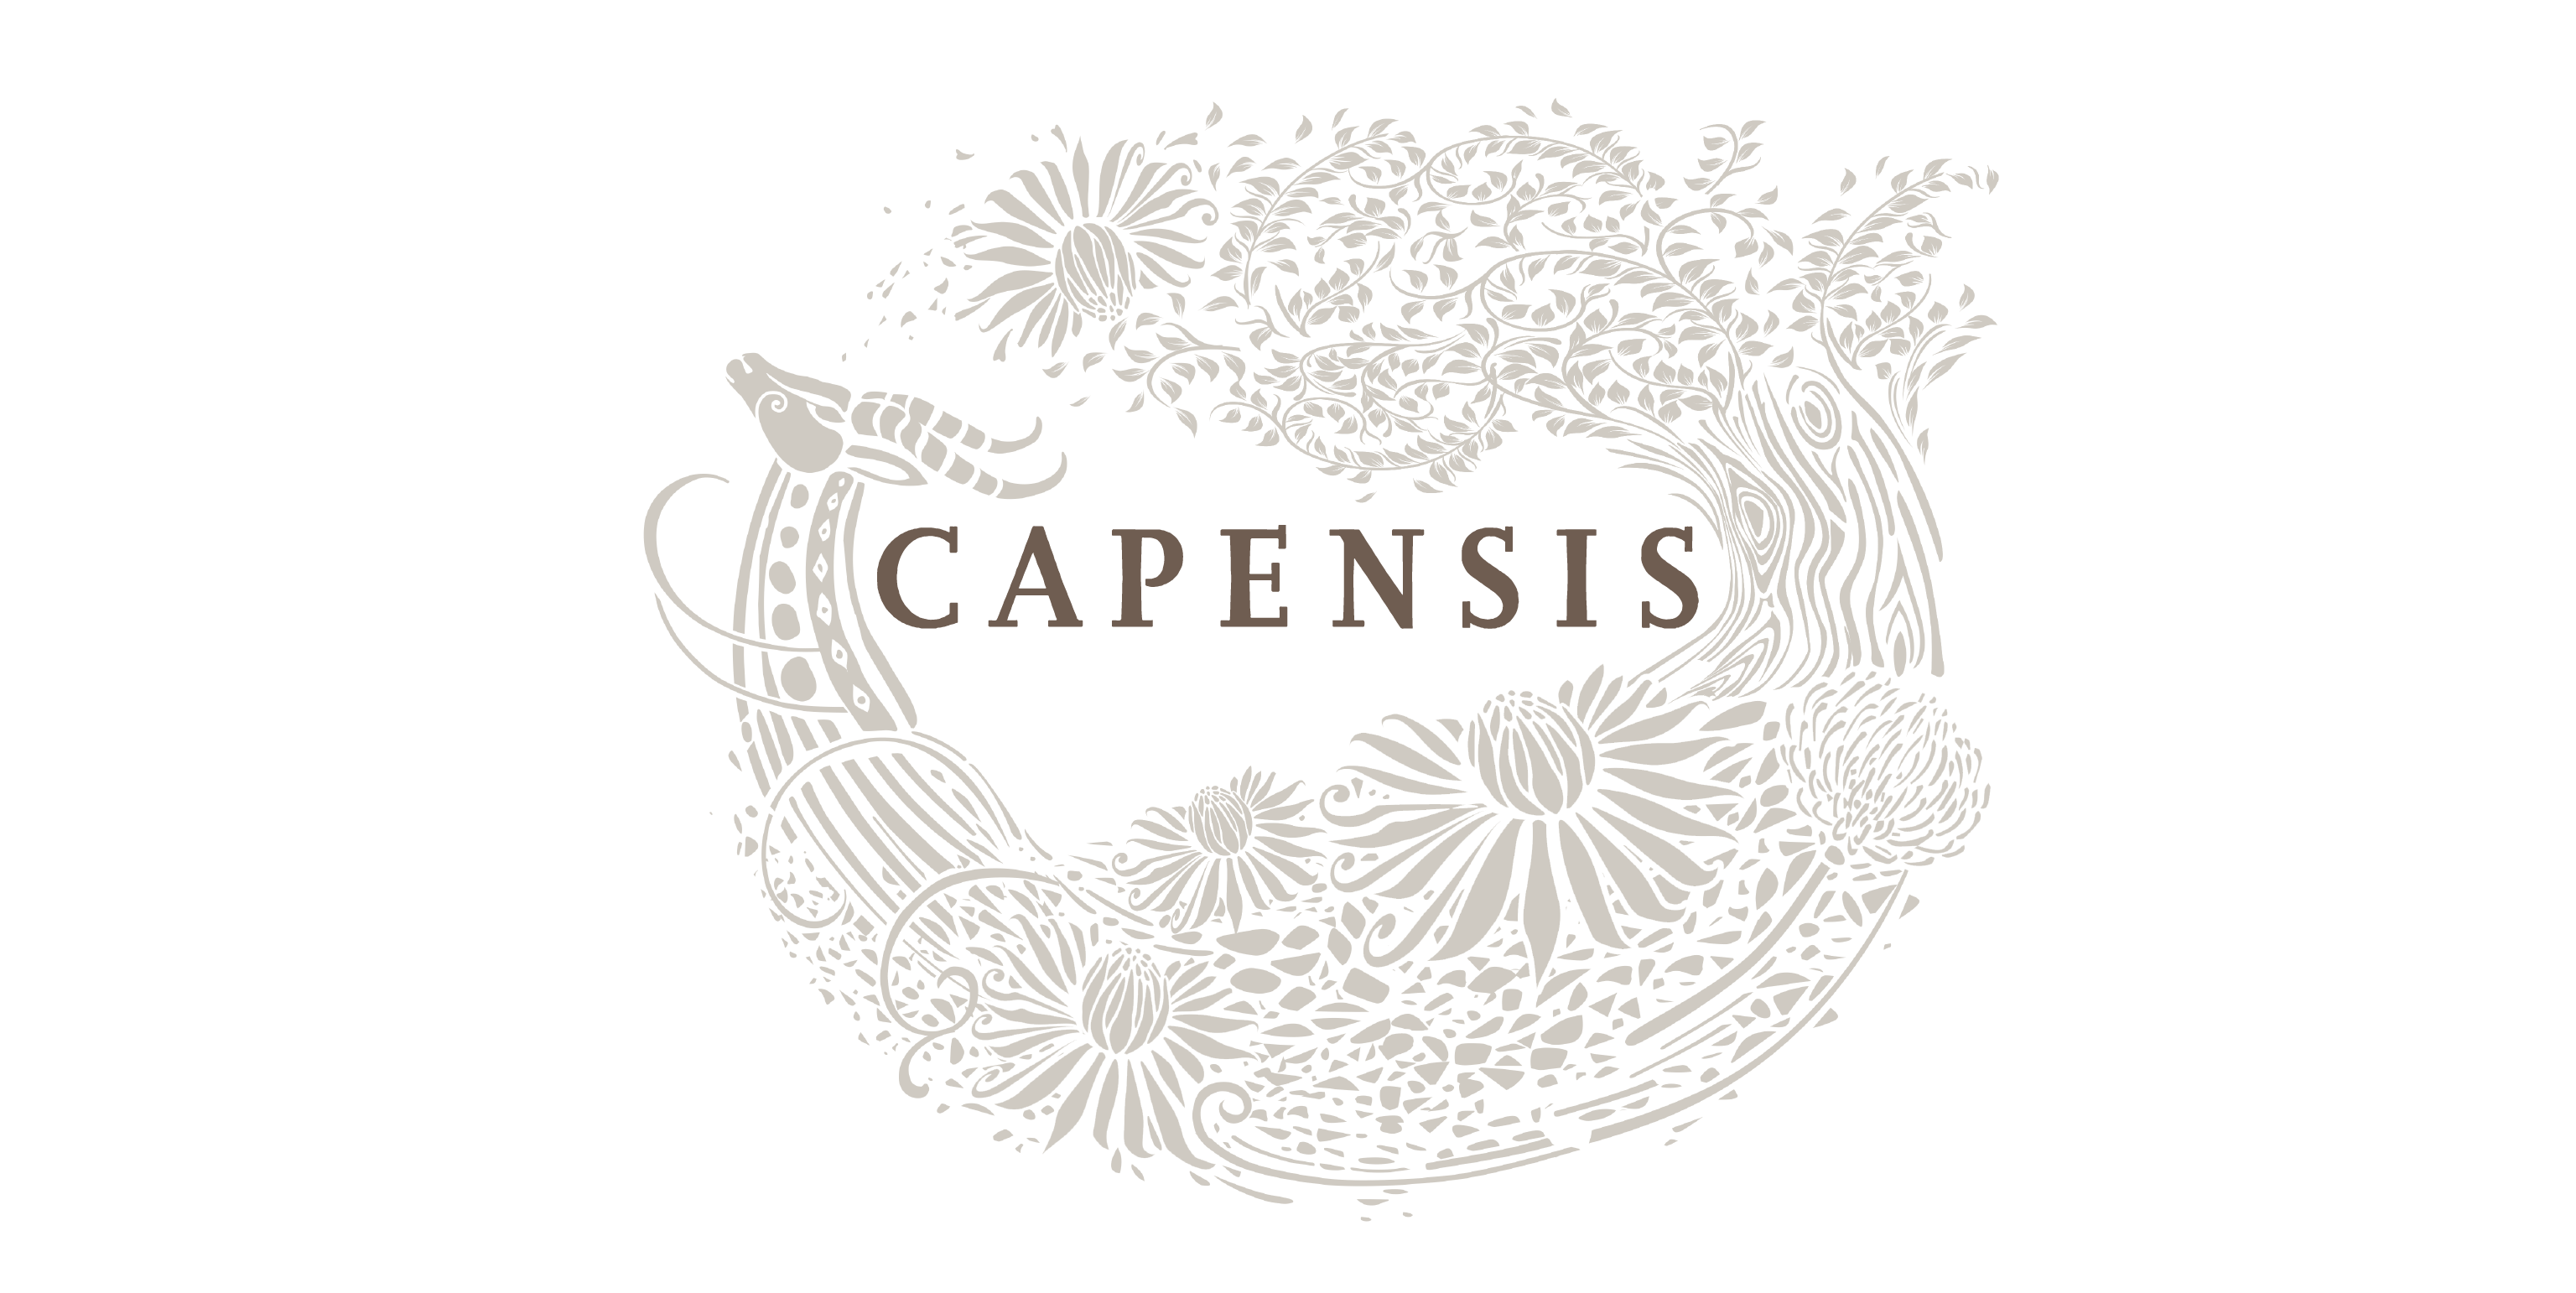 Capensis label